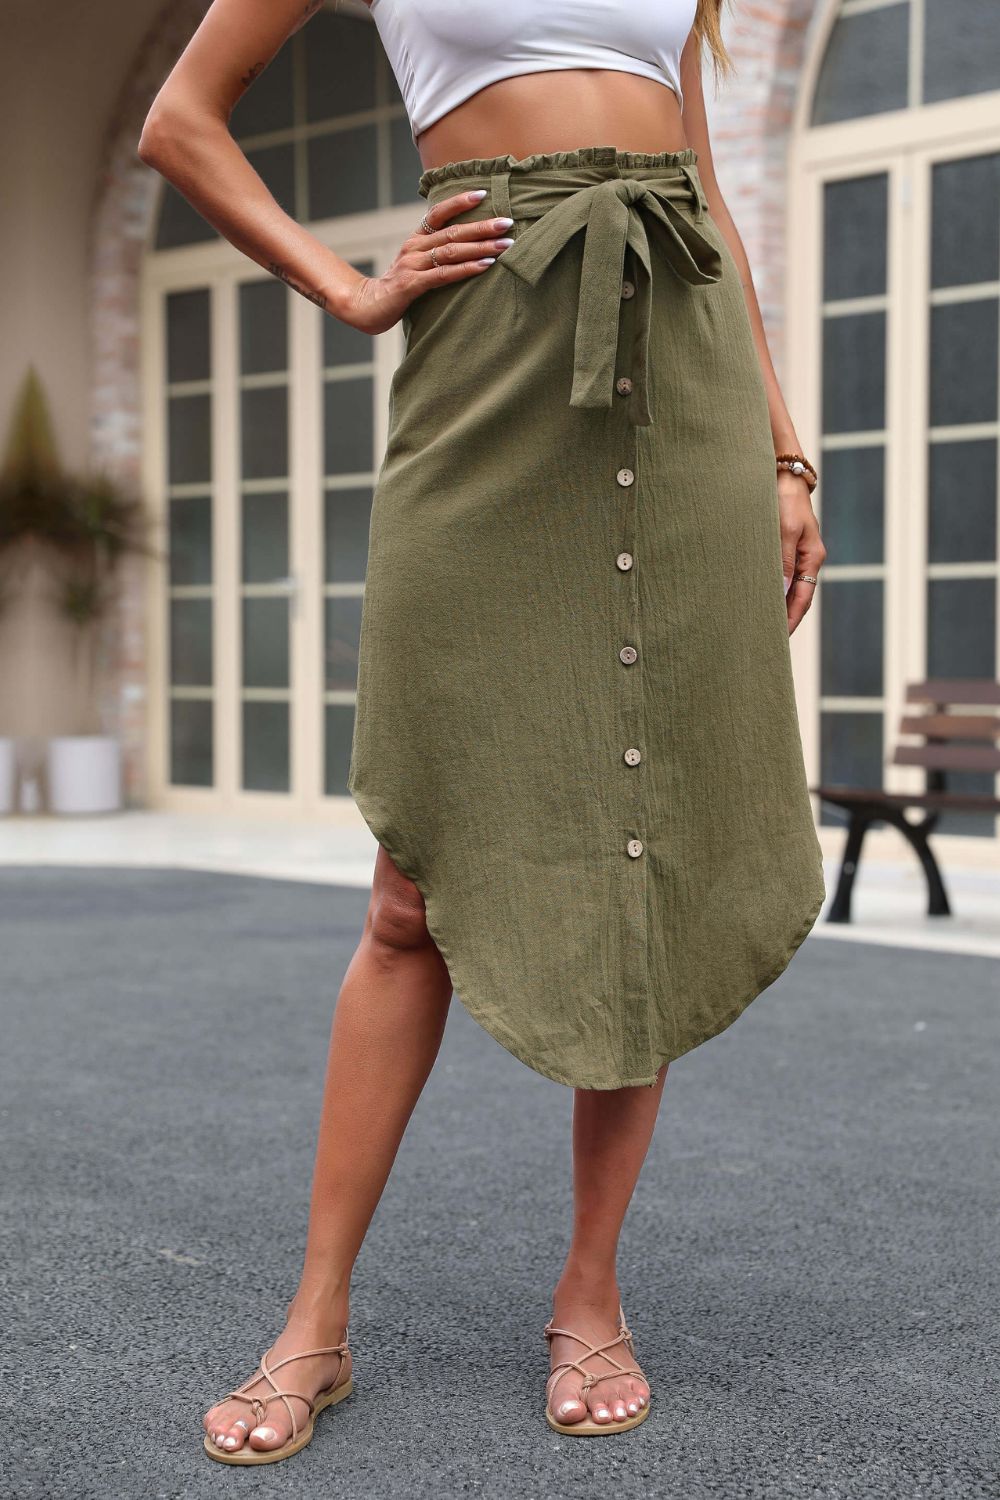 GREEN - Tie Belt Frill Trim Buttoned Skirt - 2 colors - womens skirt at TFC&H Co.